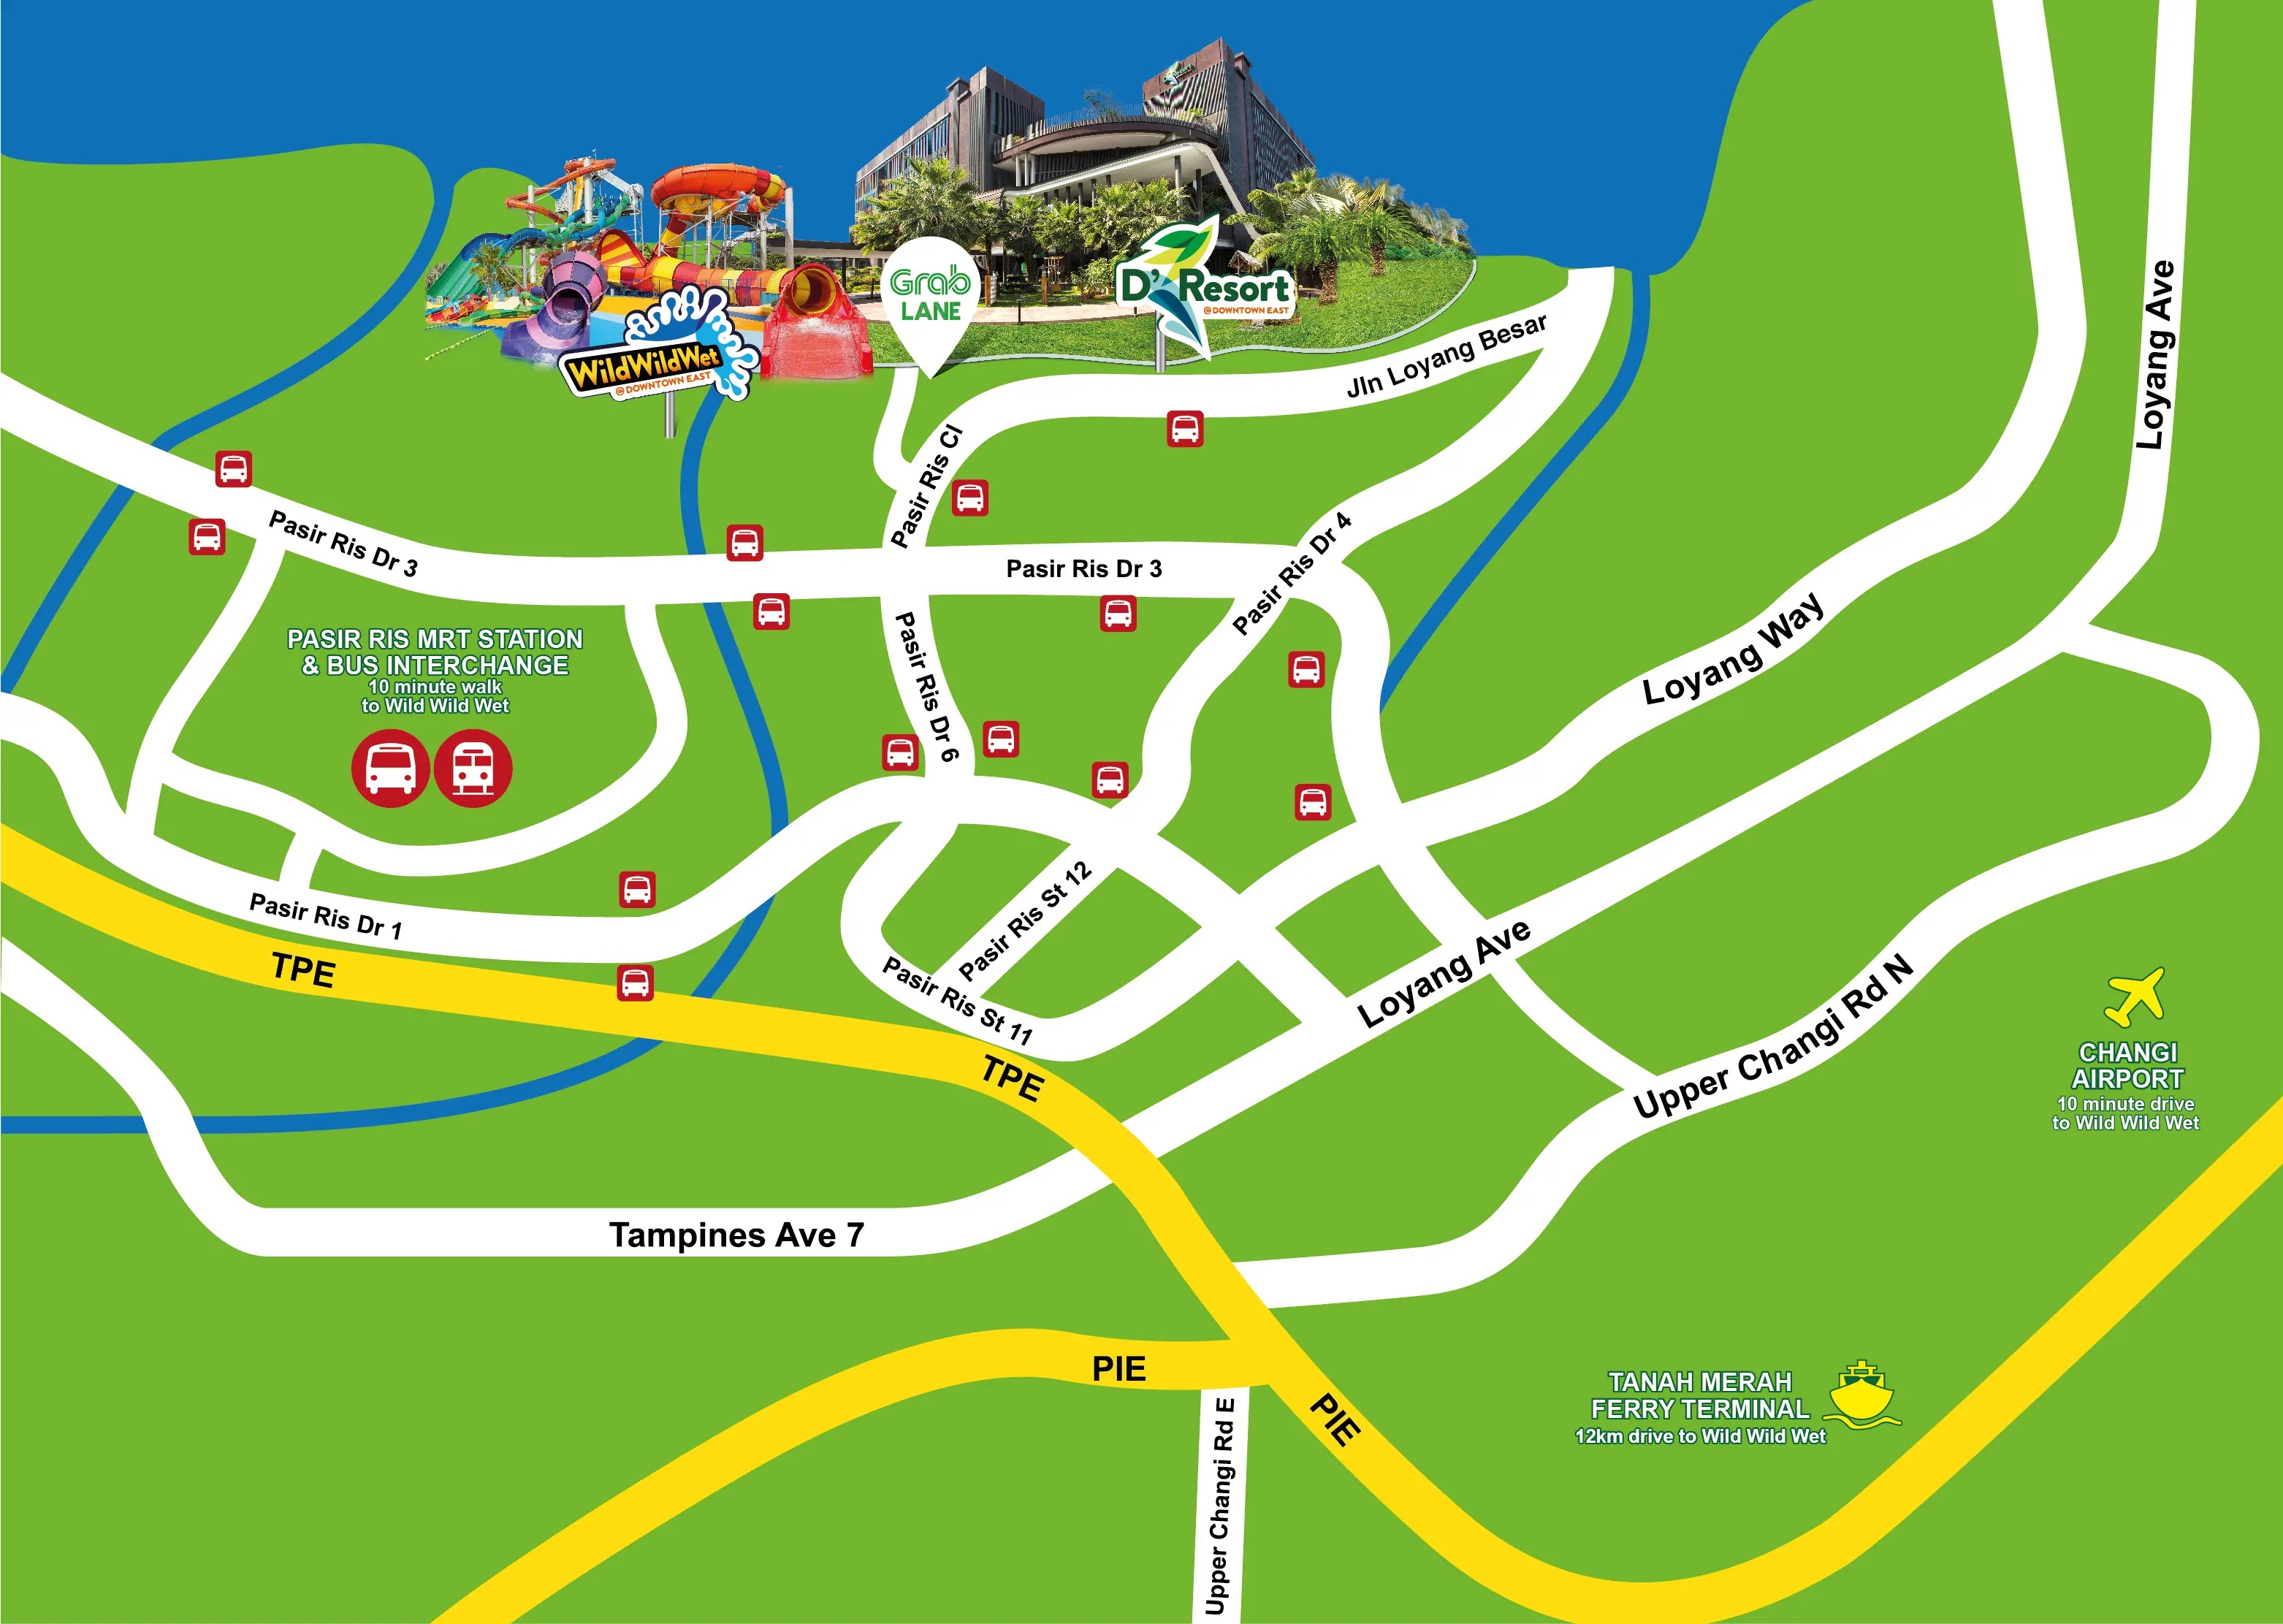 D'Resort Singapore's map